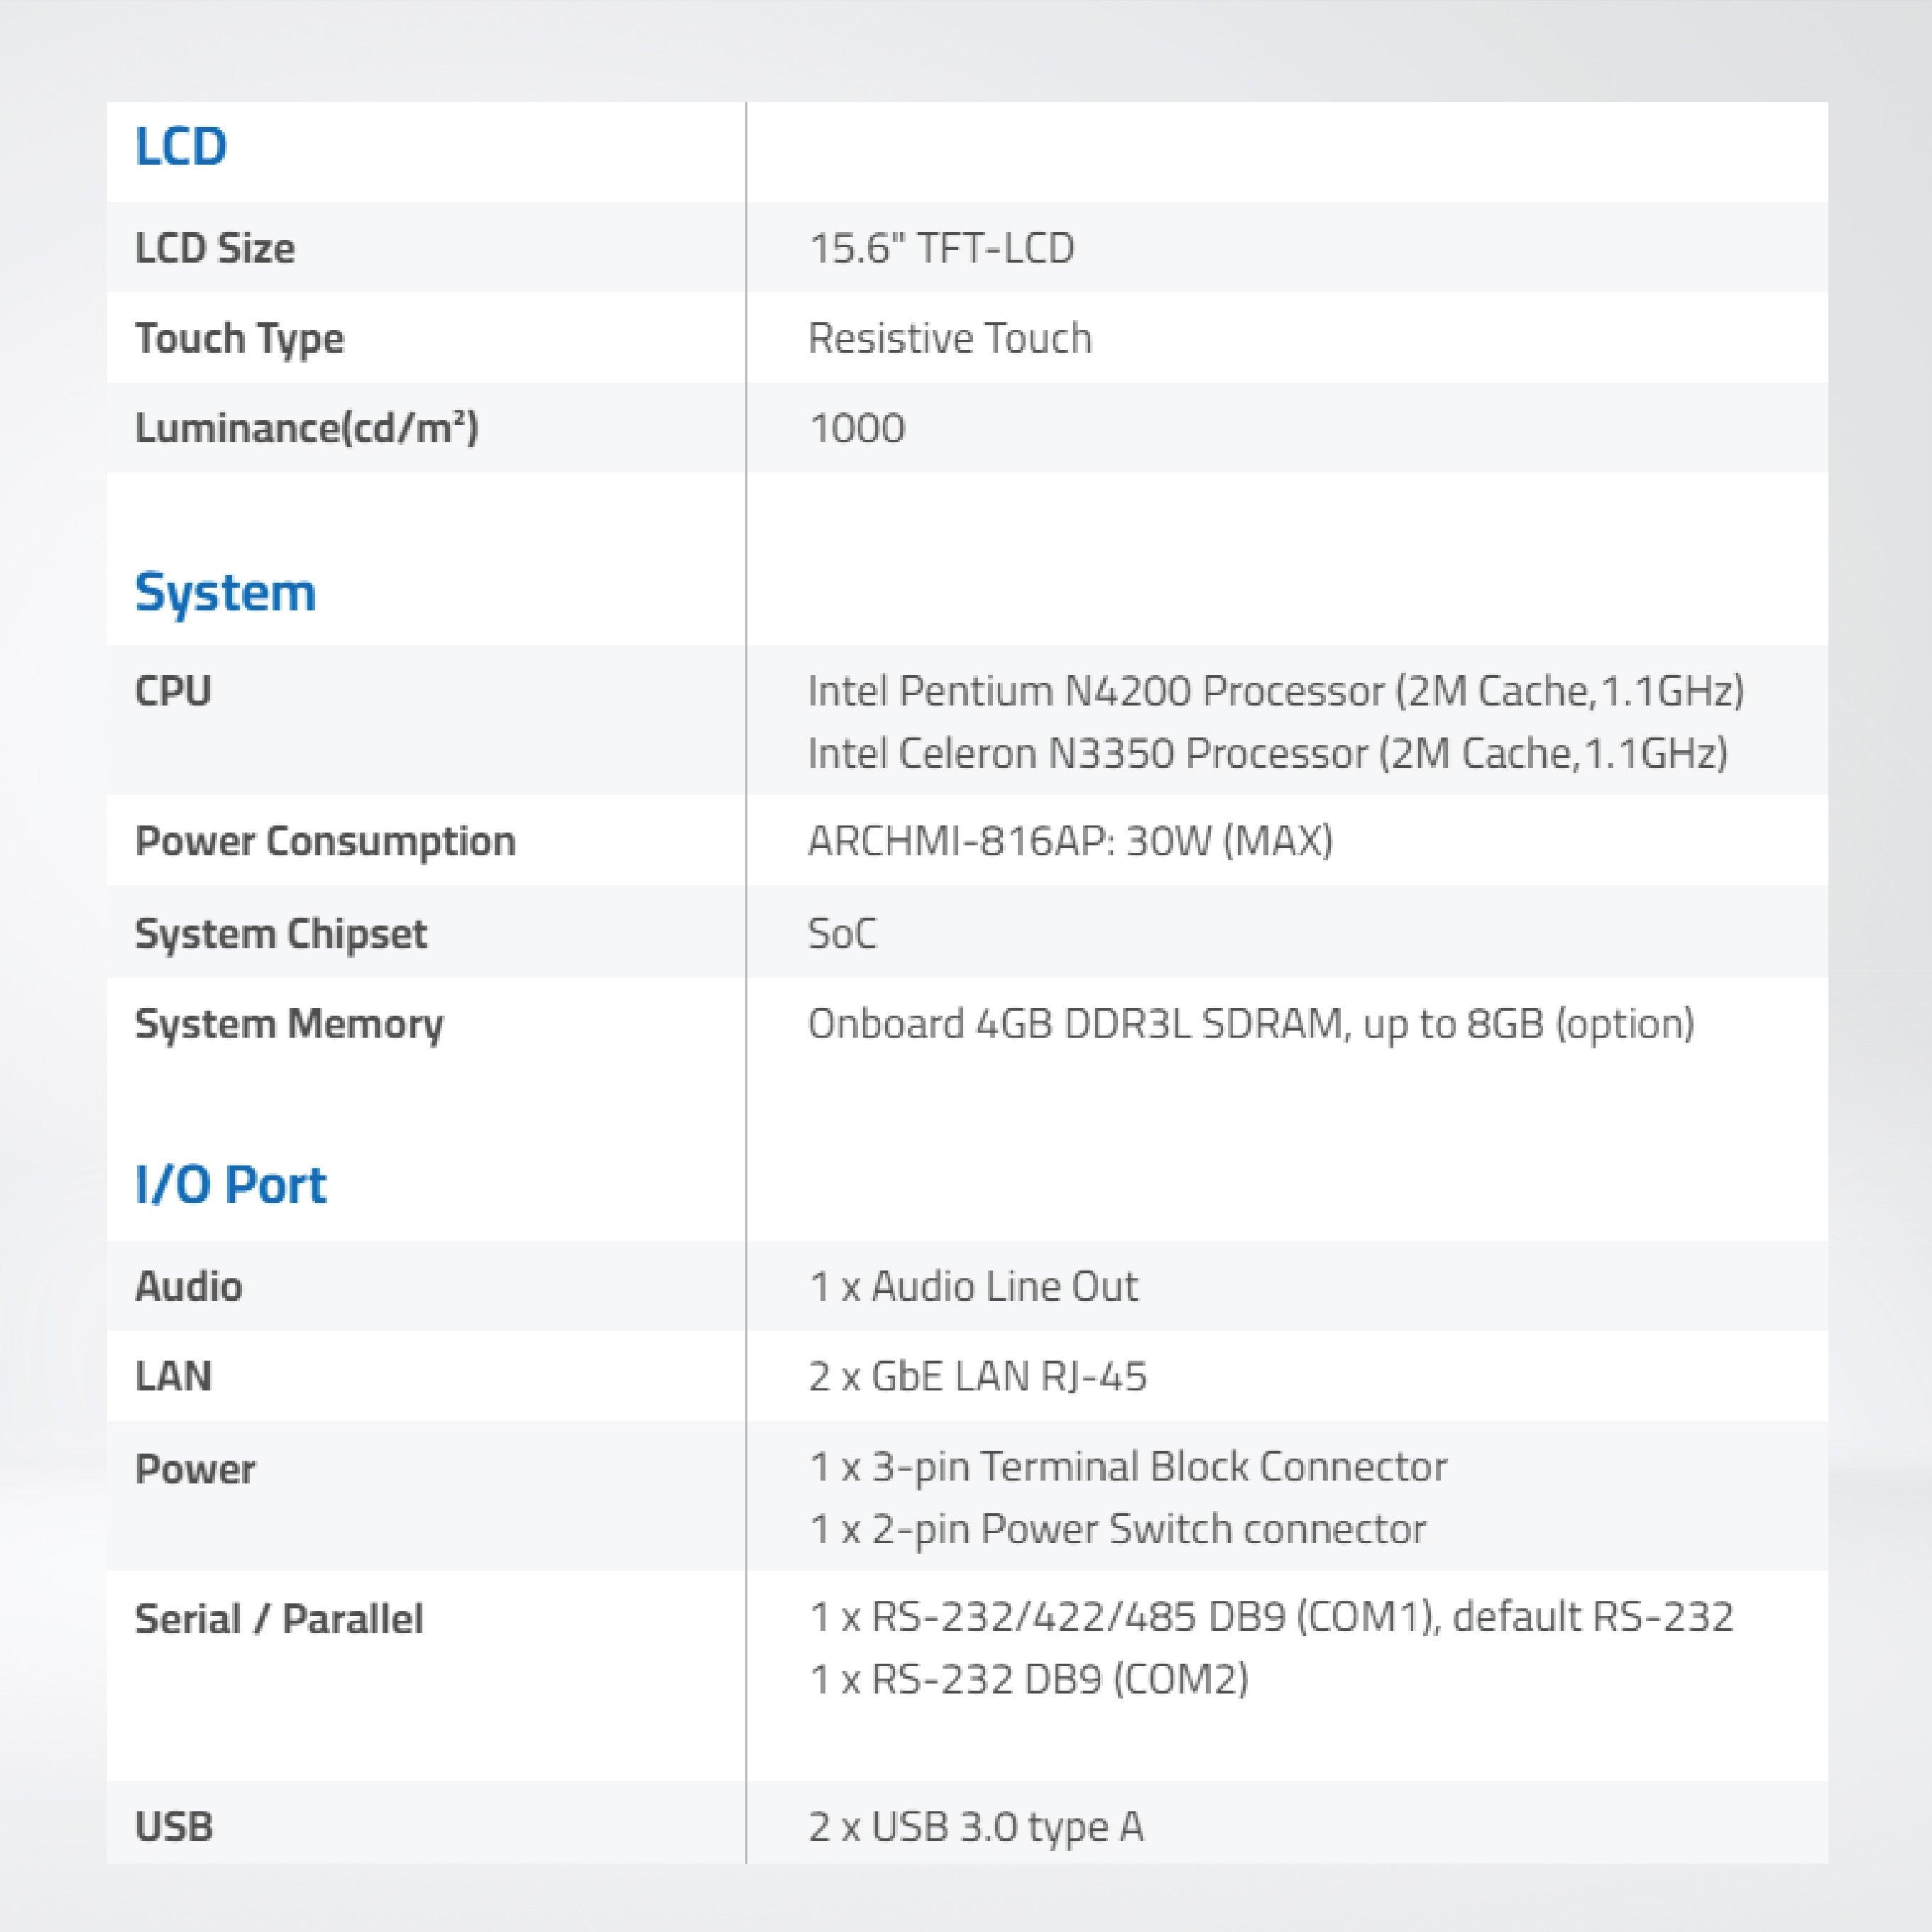 ARCHMI-816ARH 15.6" Intel Apollo Lake N4200/N3350 Fanless Industrial Compact Size Panel PC - Riverplus